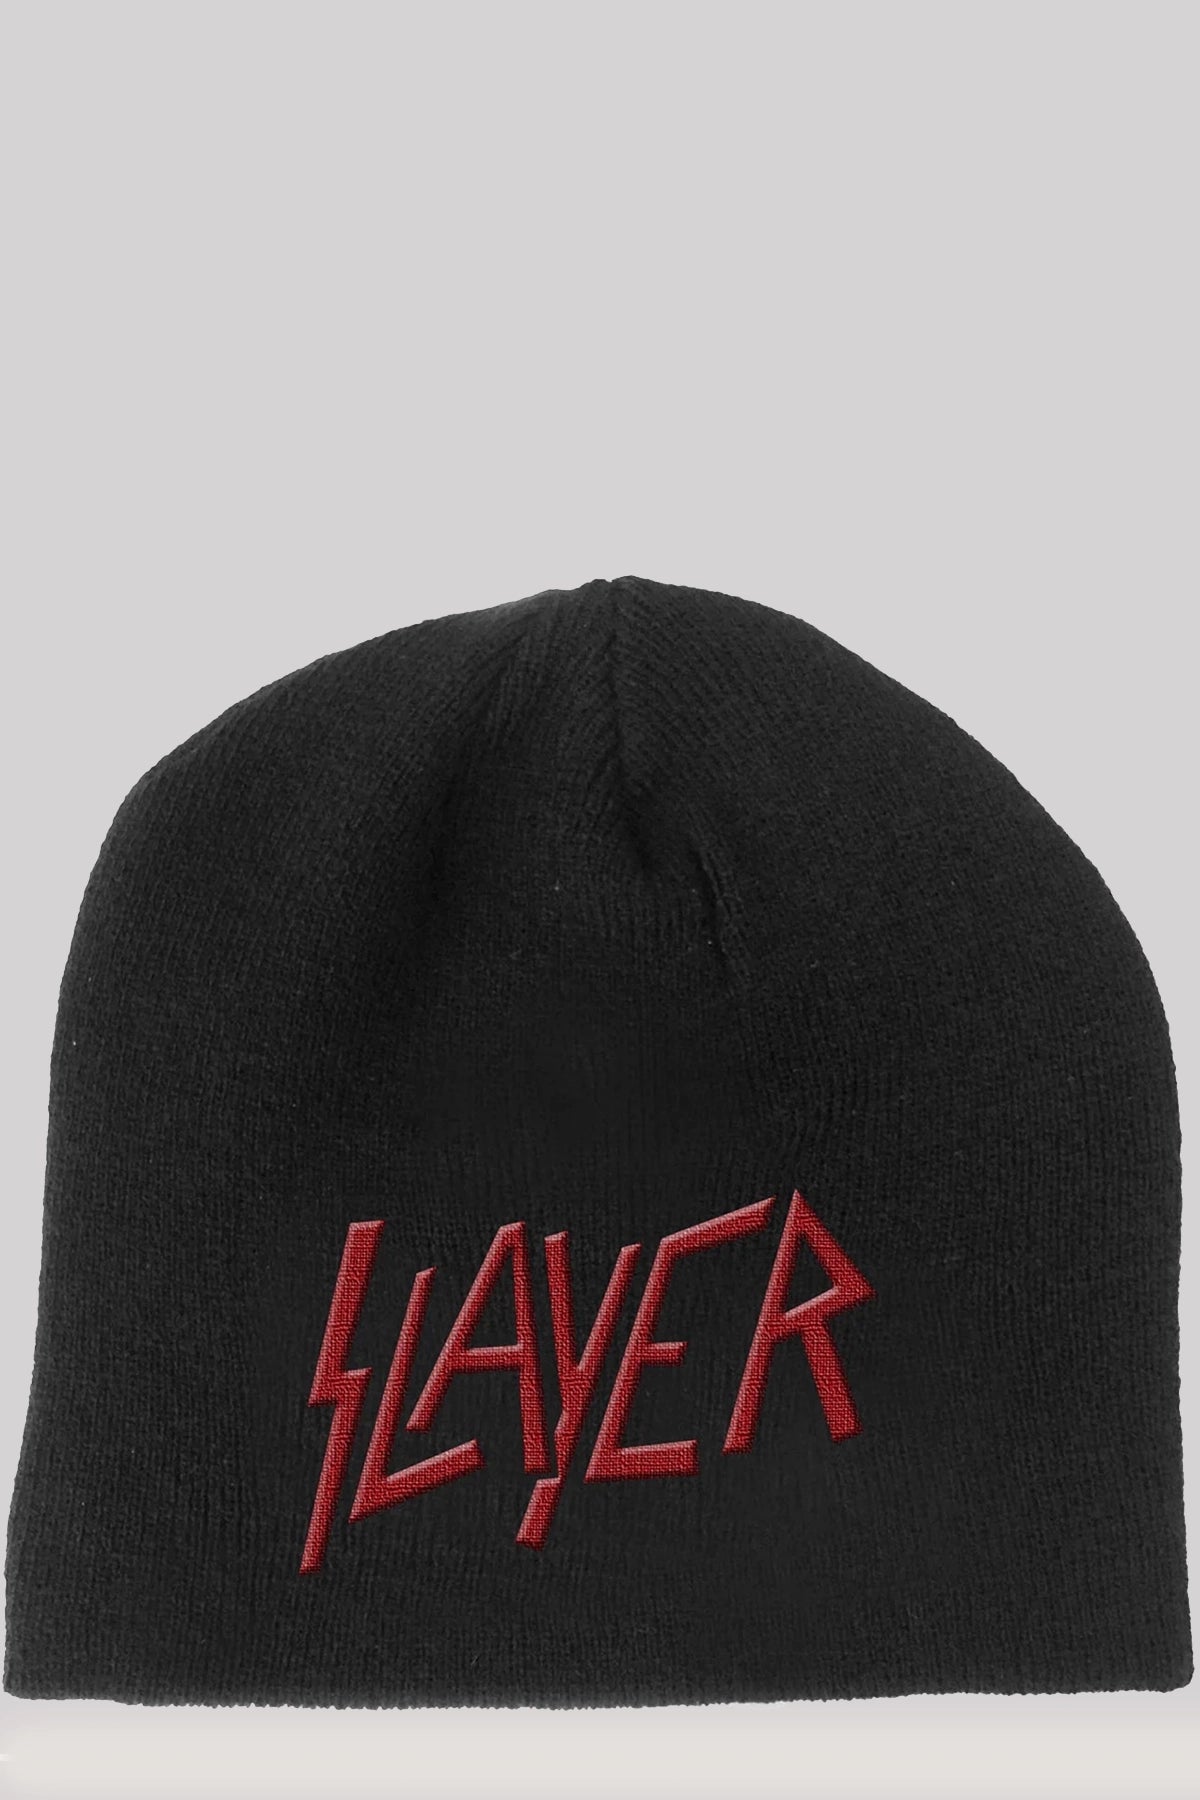 Slayer Unisex Beanie Hat: Logo Official Merchandise